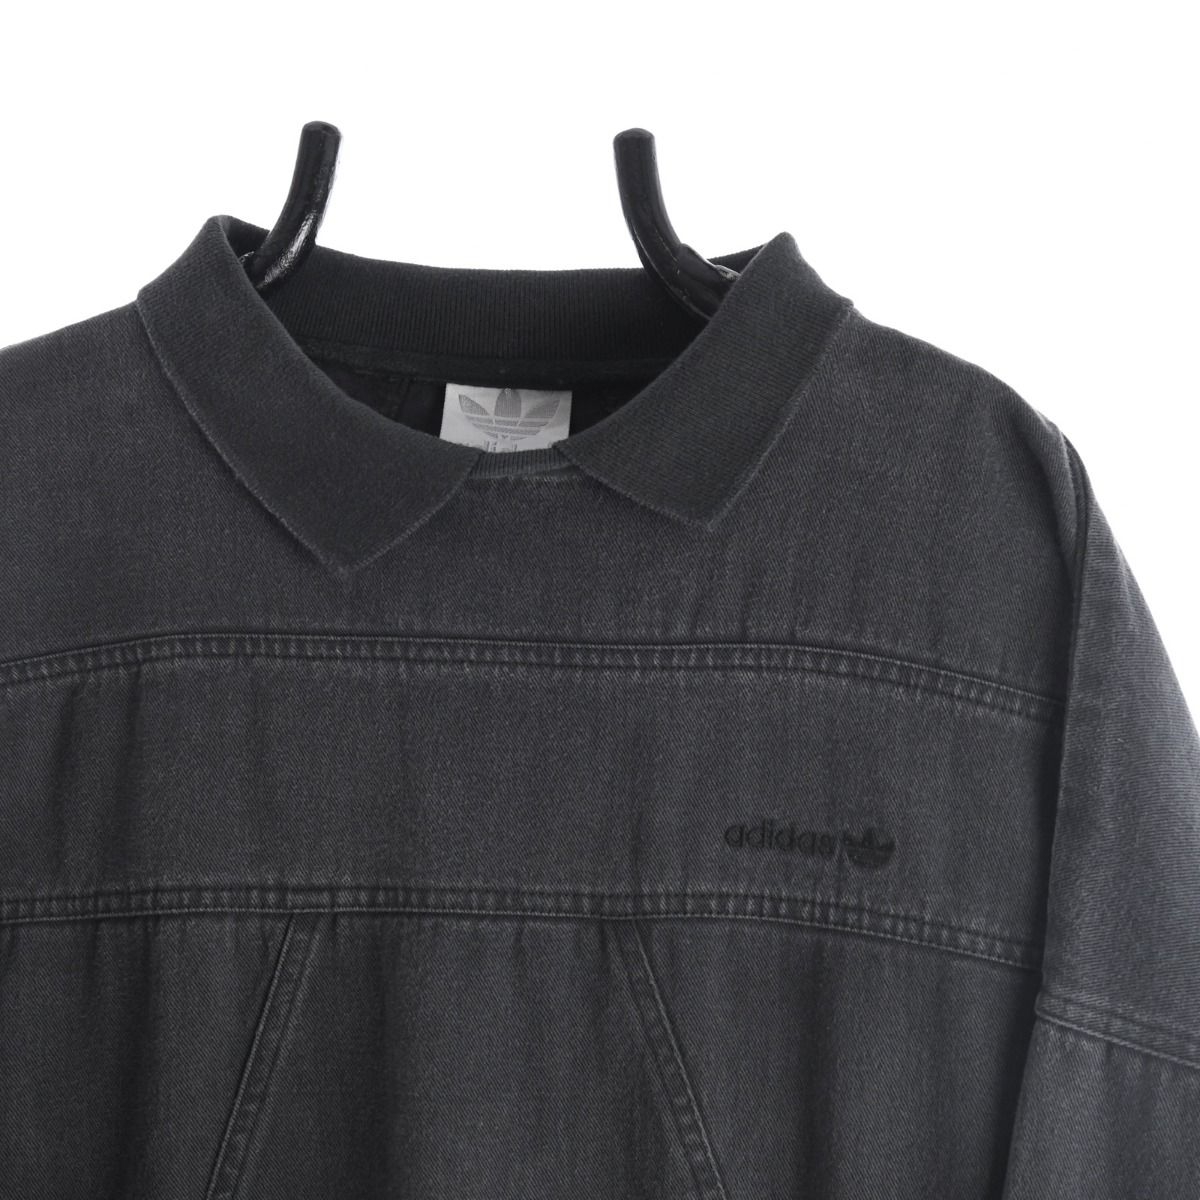 Adidas Late 1980s Denim Collared Sweatshirt